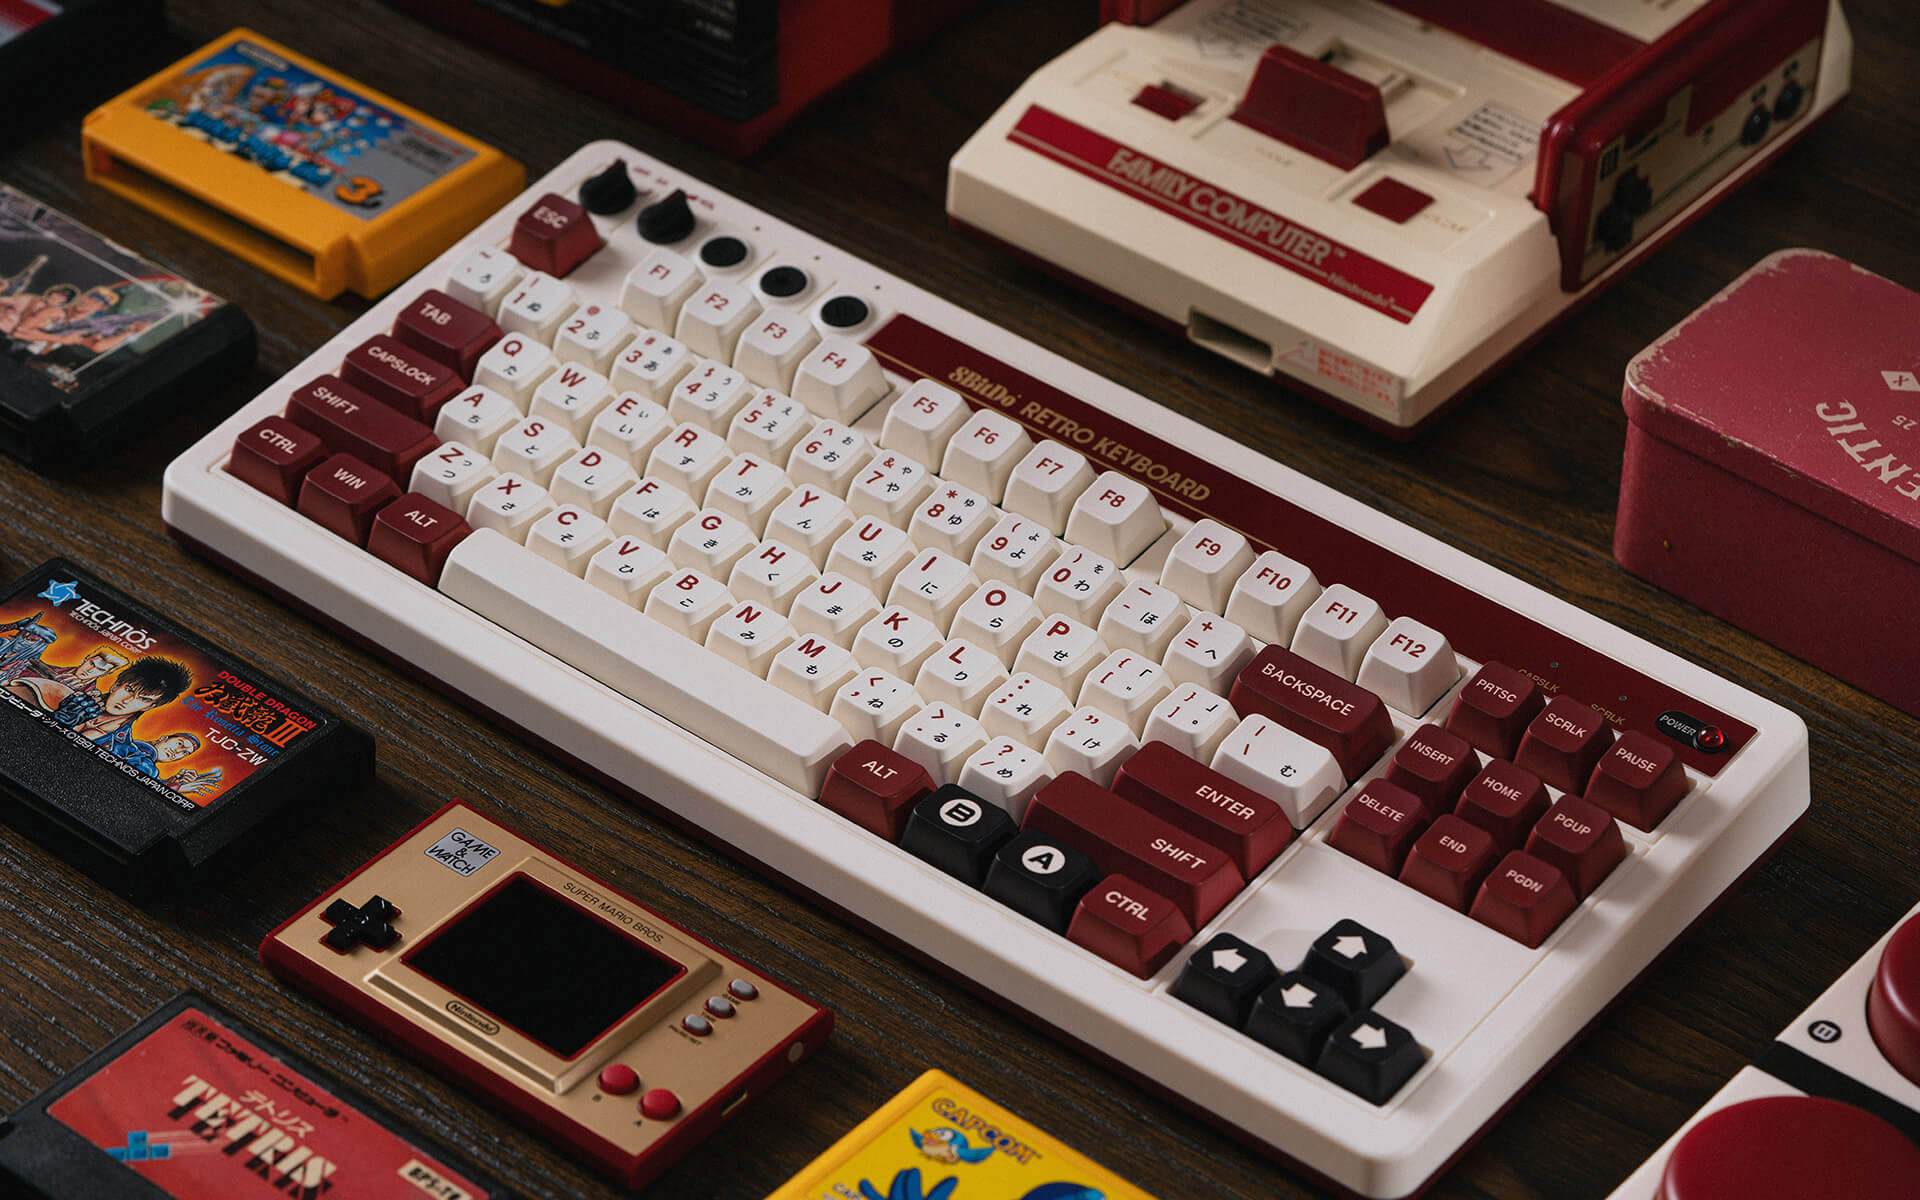 The 8BitDo Retro Mechanical Keyboard Fami Edition